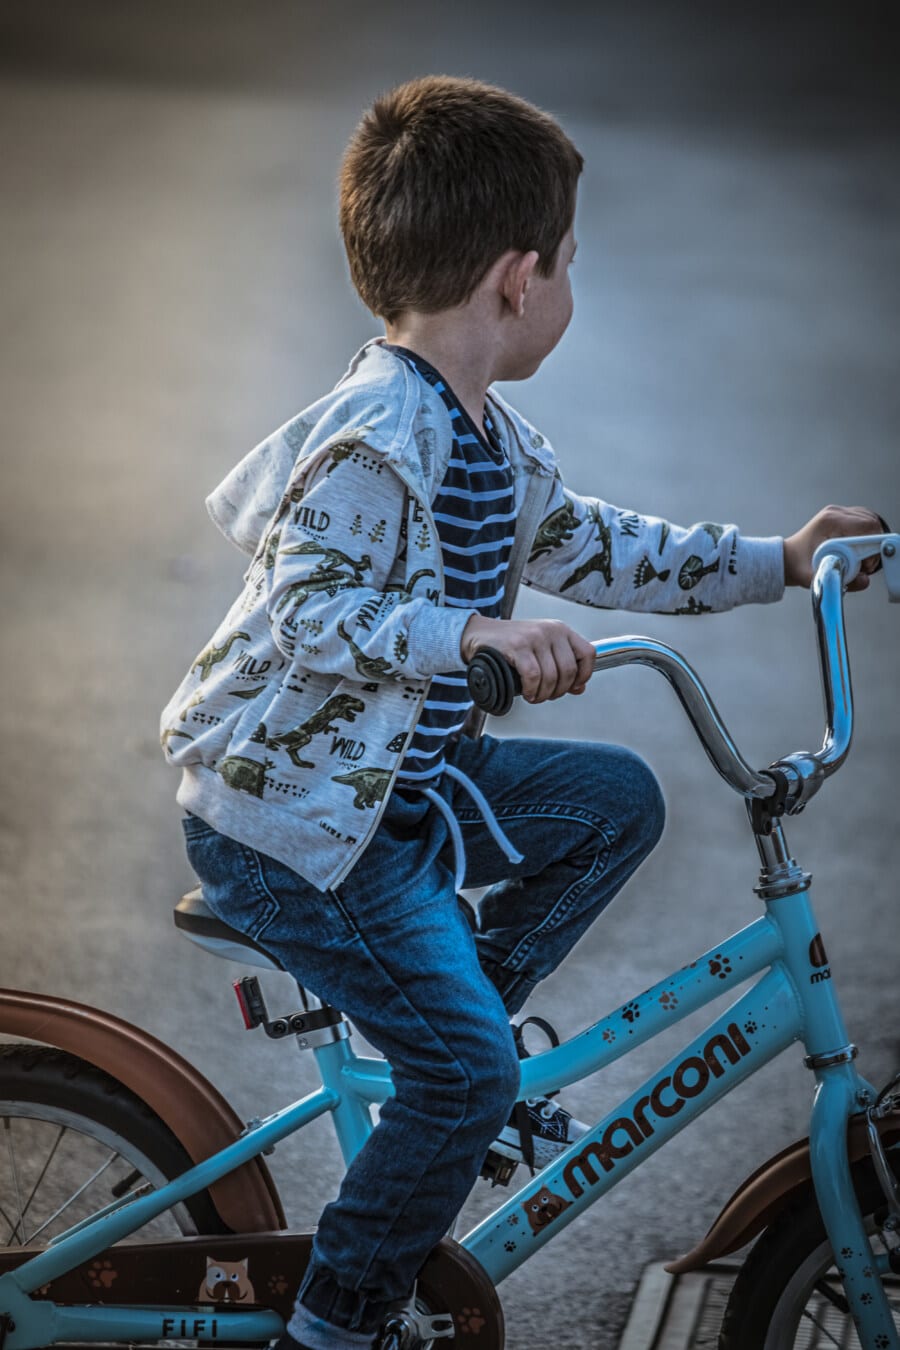 cycling, cyclist, child, boy, enjoying, fun, bike, leisure, exercise, active